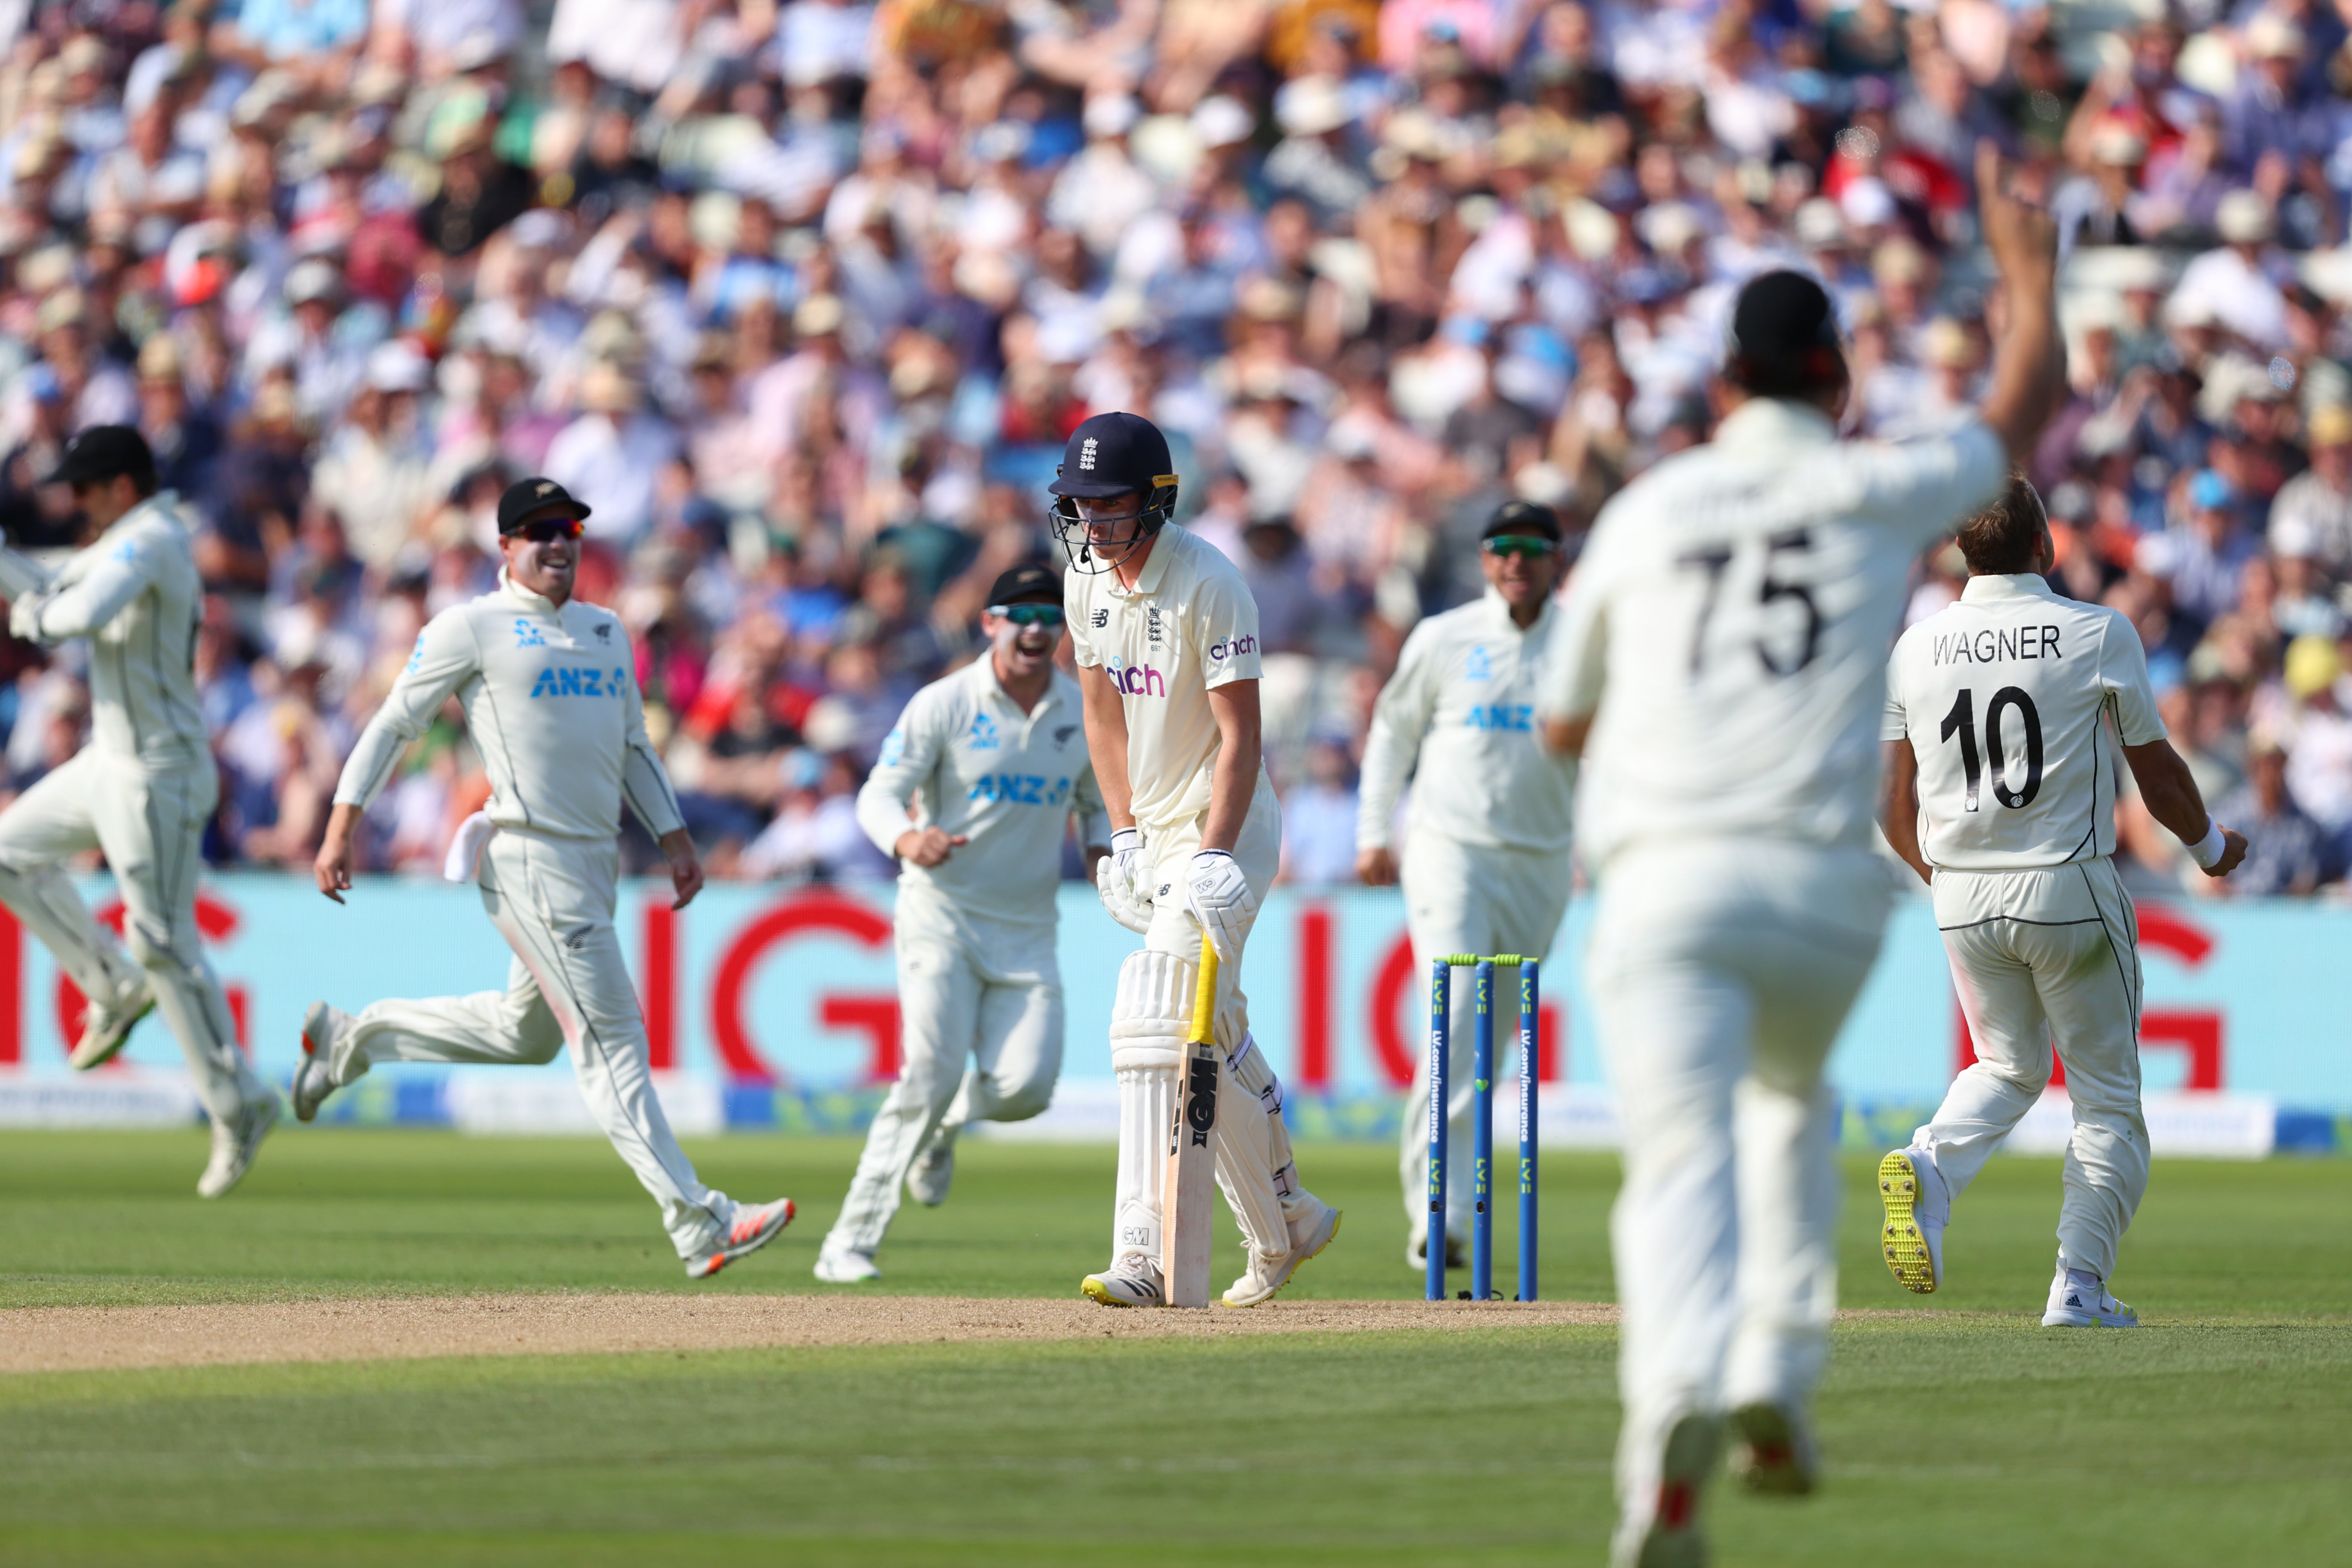 England batsman Dan Lawrence is dismissed by New Zealand bowler Neil Wagner for 0